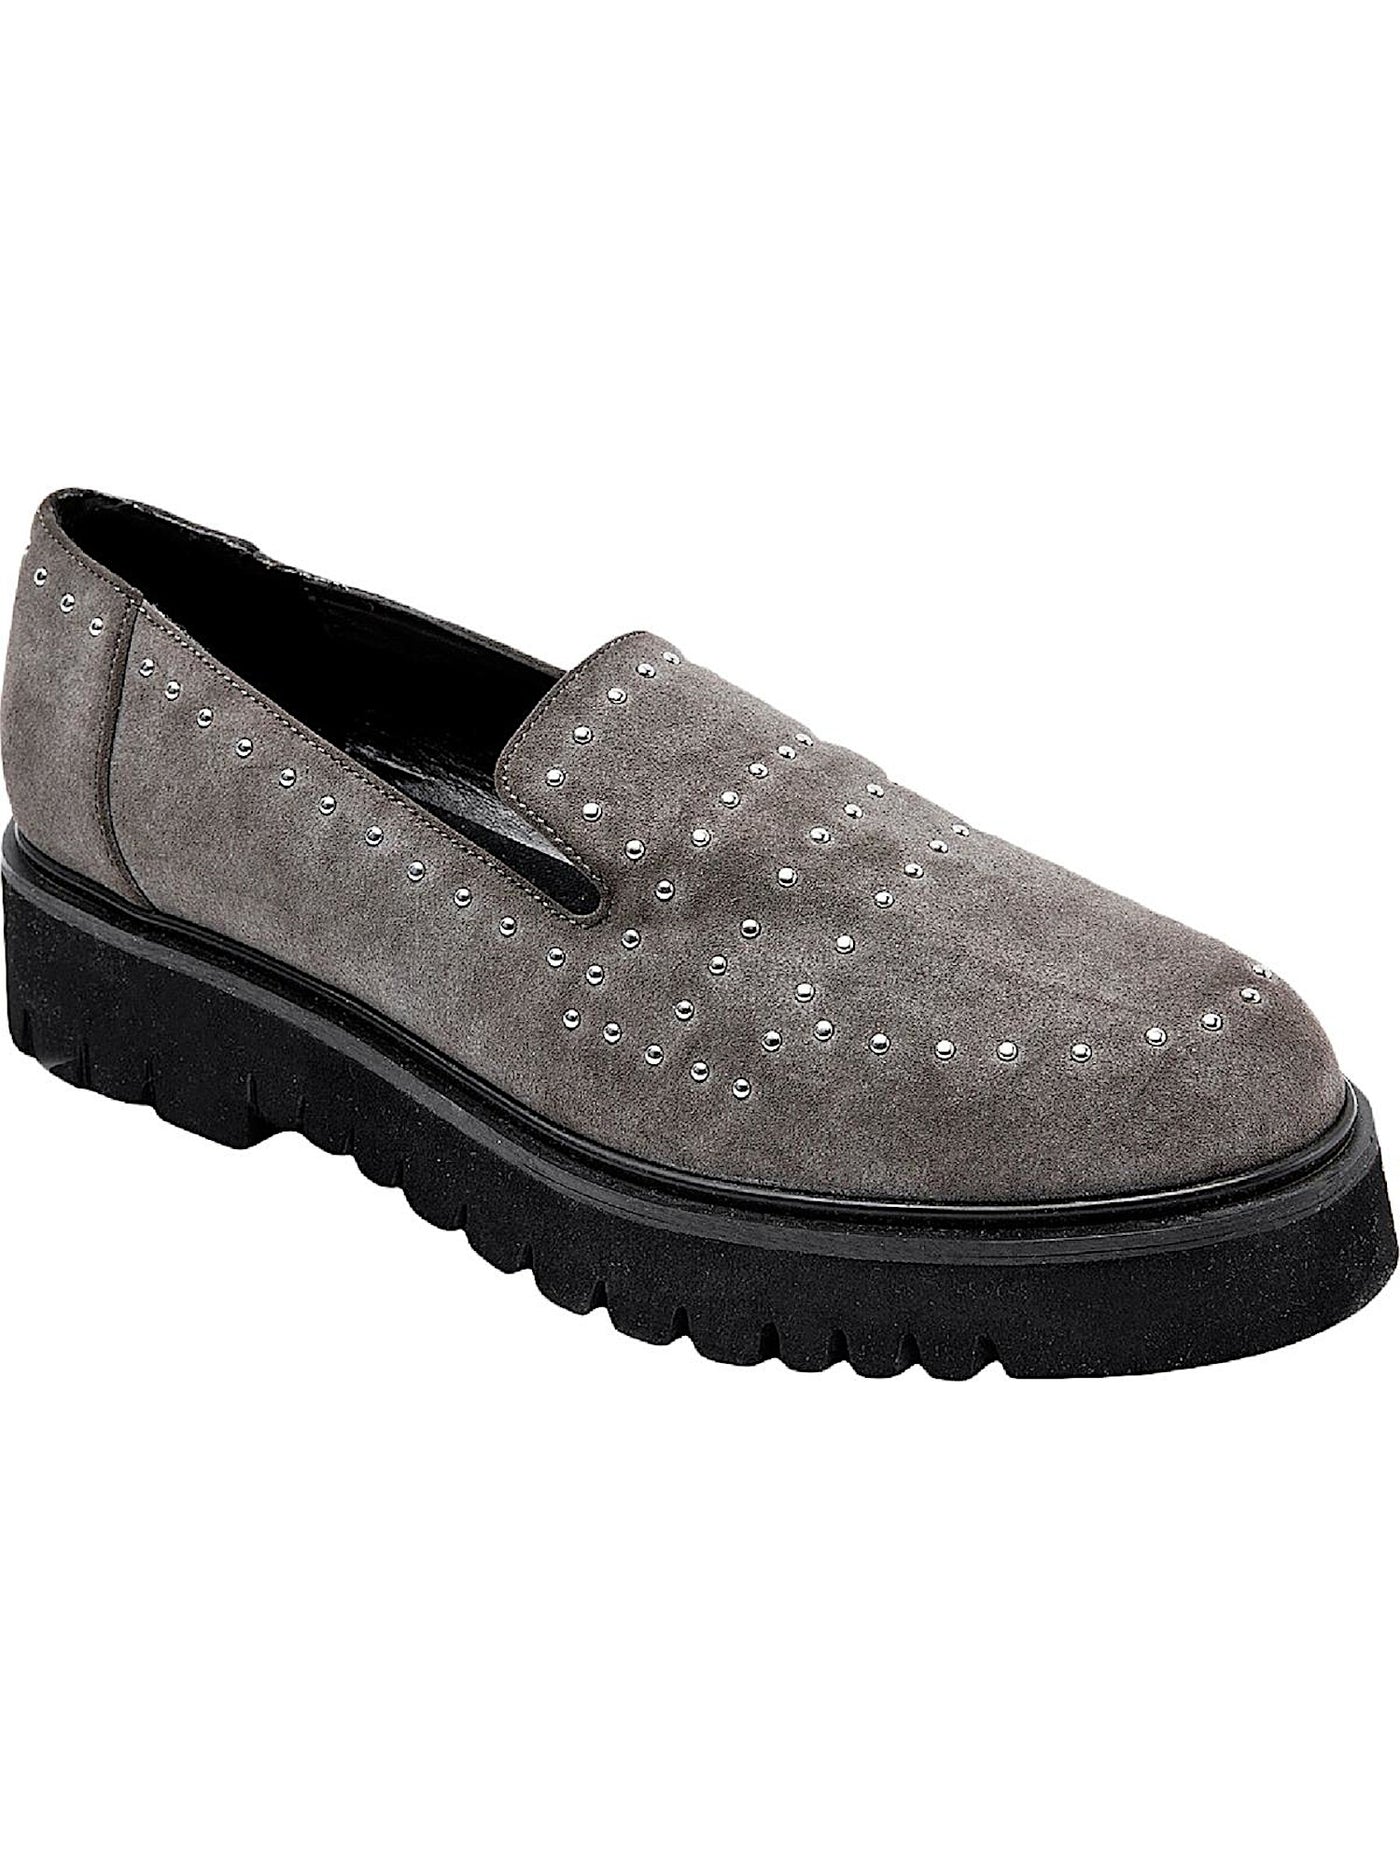 JANE AND THE SHOE Womens Gray Studded Lug Sole Elena Almond Toe Slip On Loafers Shoes 6.5